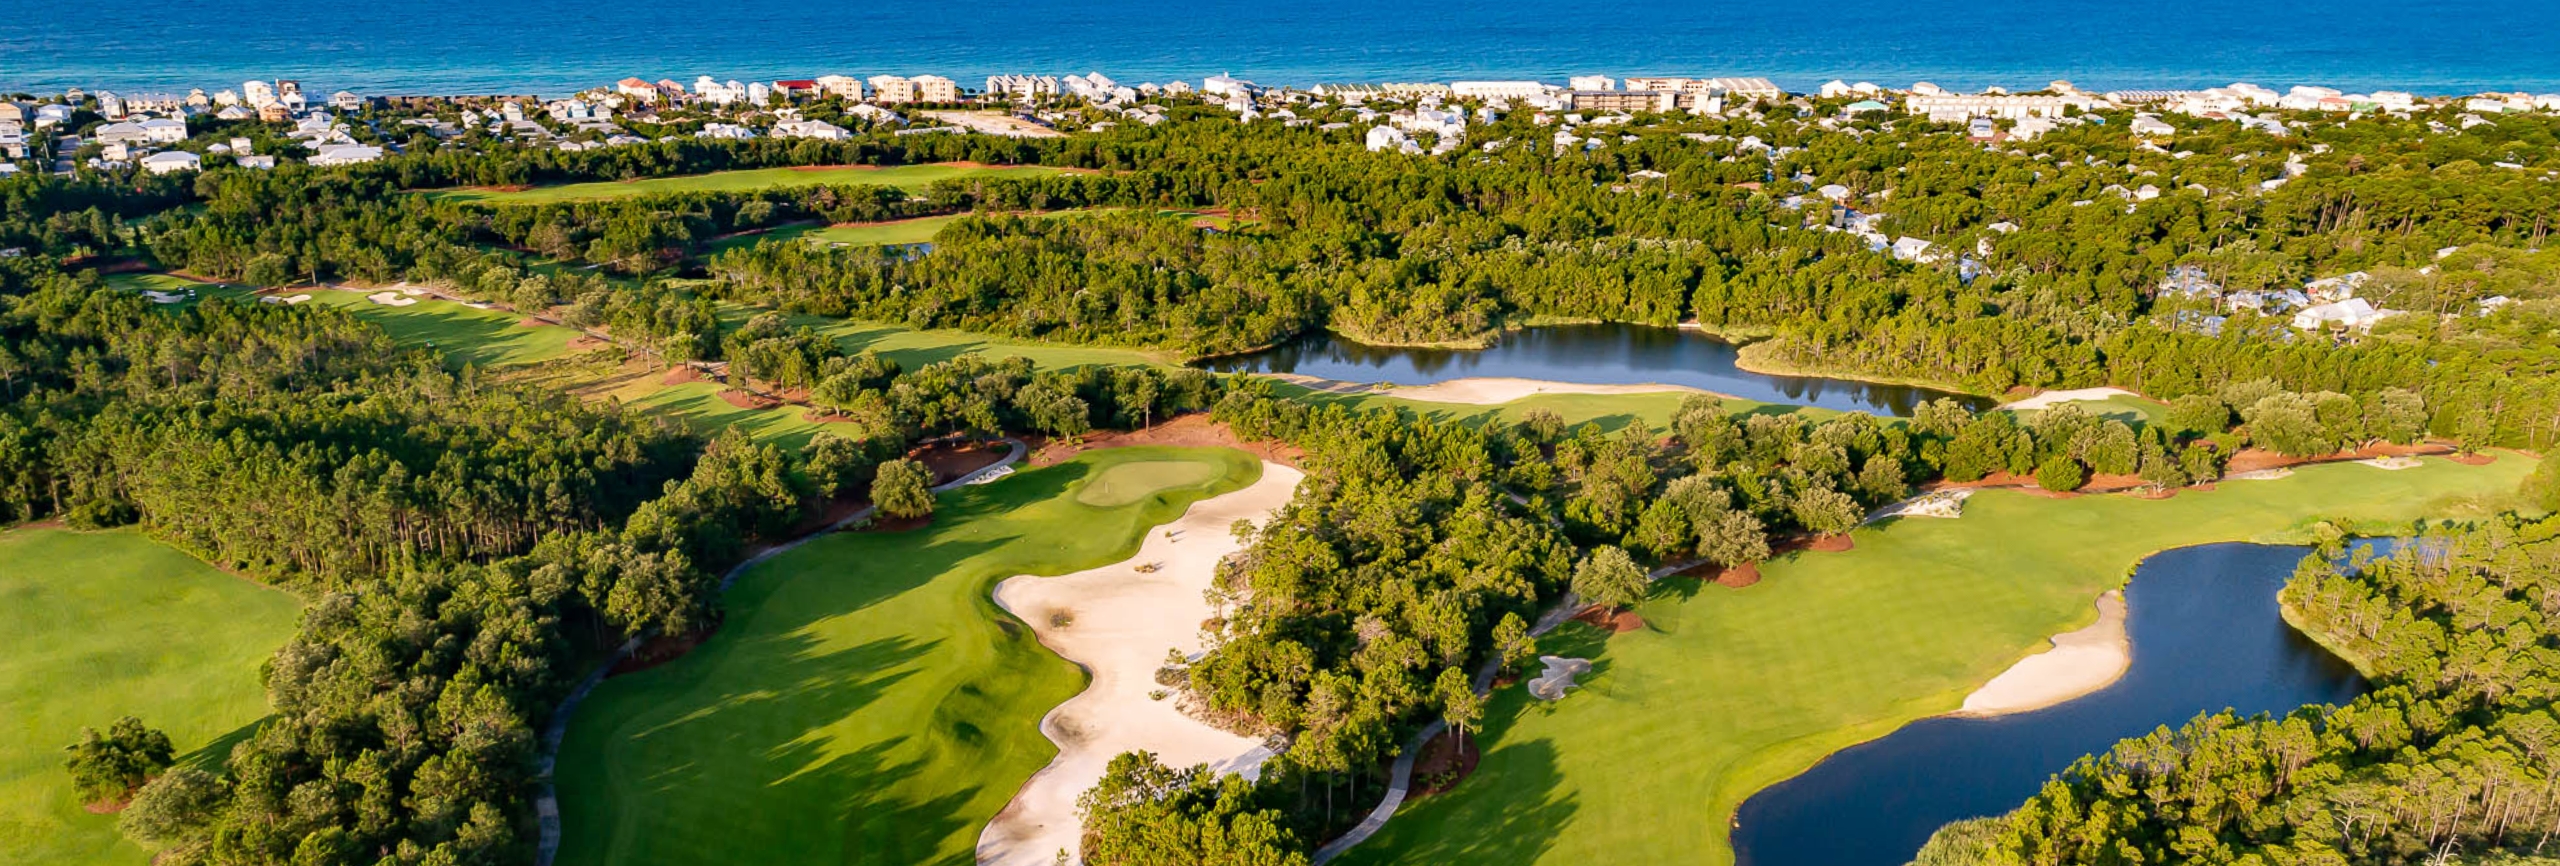 Award-winning golf course near Panama City Beach